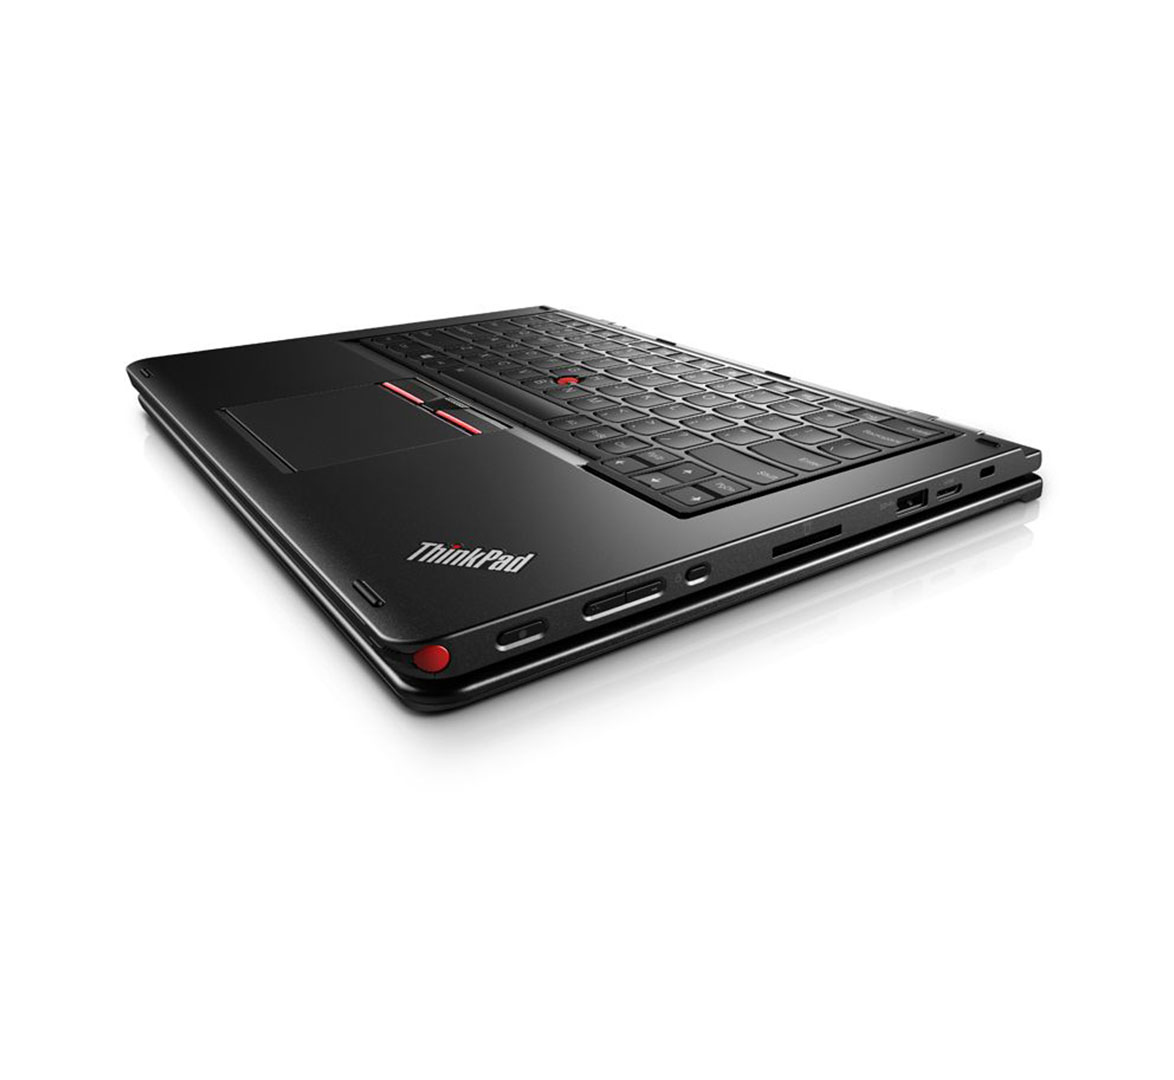 Lenovo ThinkPad S1 Yoga 12 Laptop, Intel Core i5-5th Gen. CPU, 8GB RAM, 500GB HDD+16GB SSD , 12.5 inch Touchscreen 360°, Windows 10